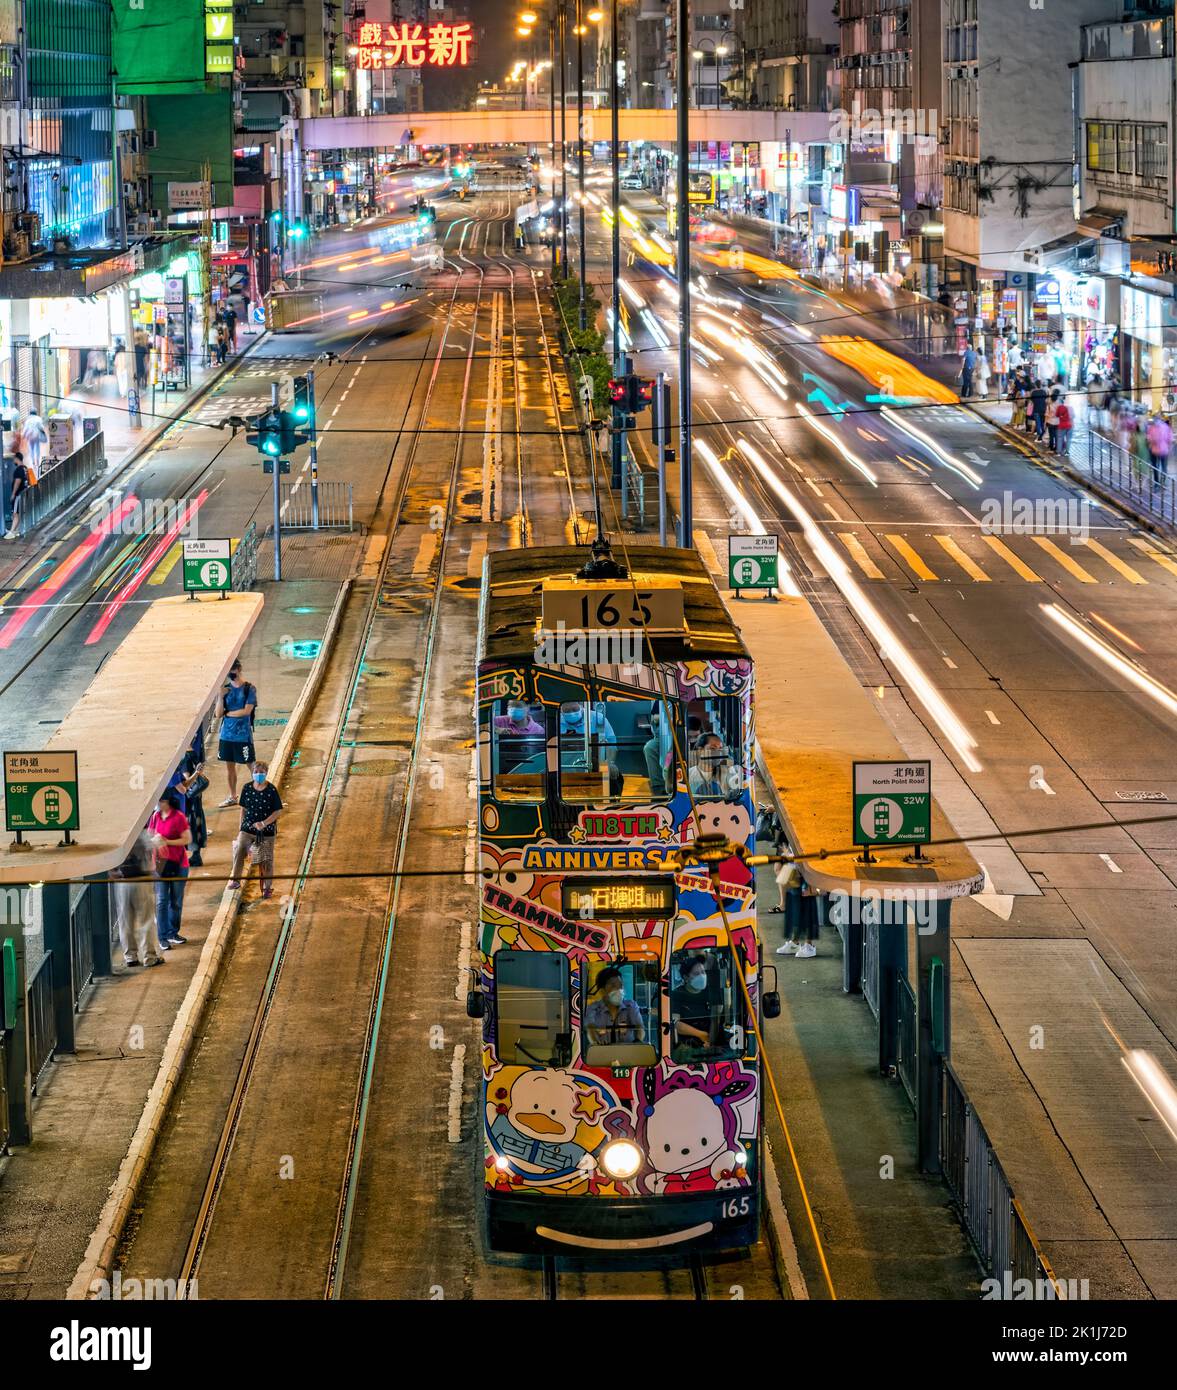 Die berühmten Hongkonger Straßenbahnen und dicht besiedelten Wohngebäude, Hongkong, China. Stockfoto